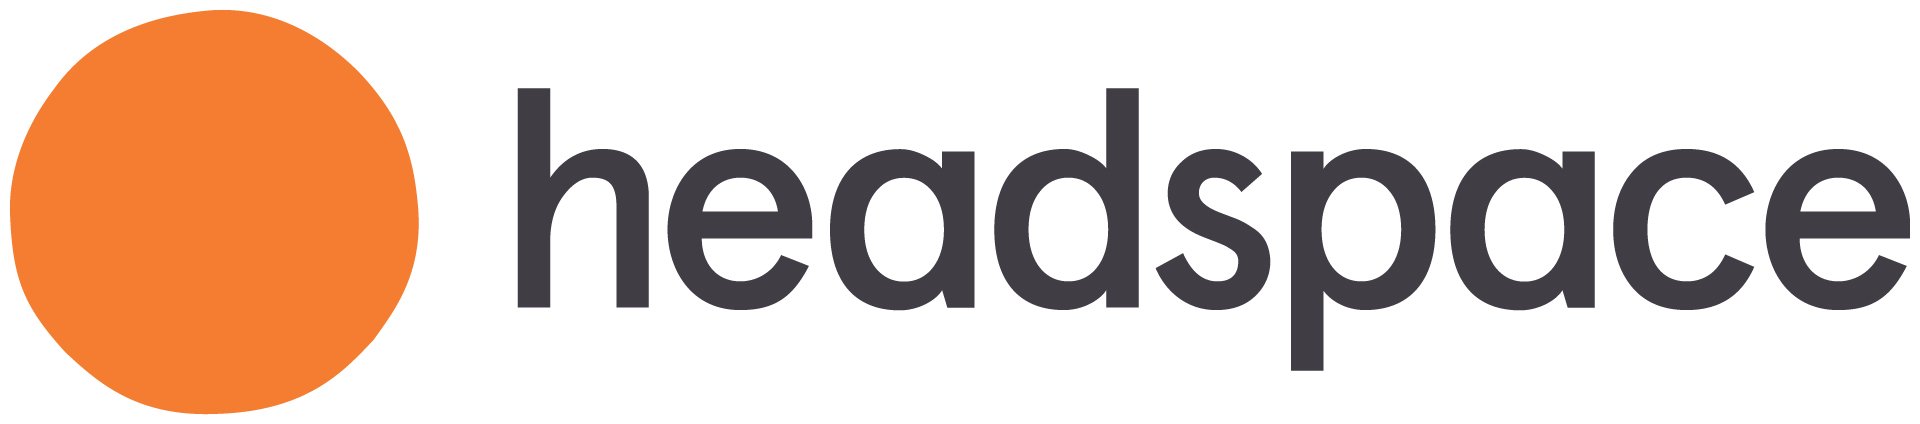 headspace_logo_primary.jpg